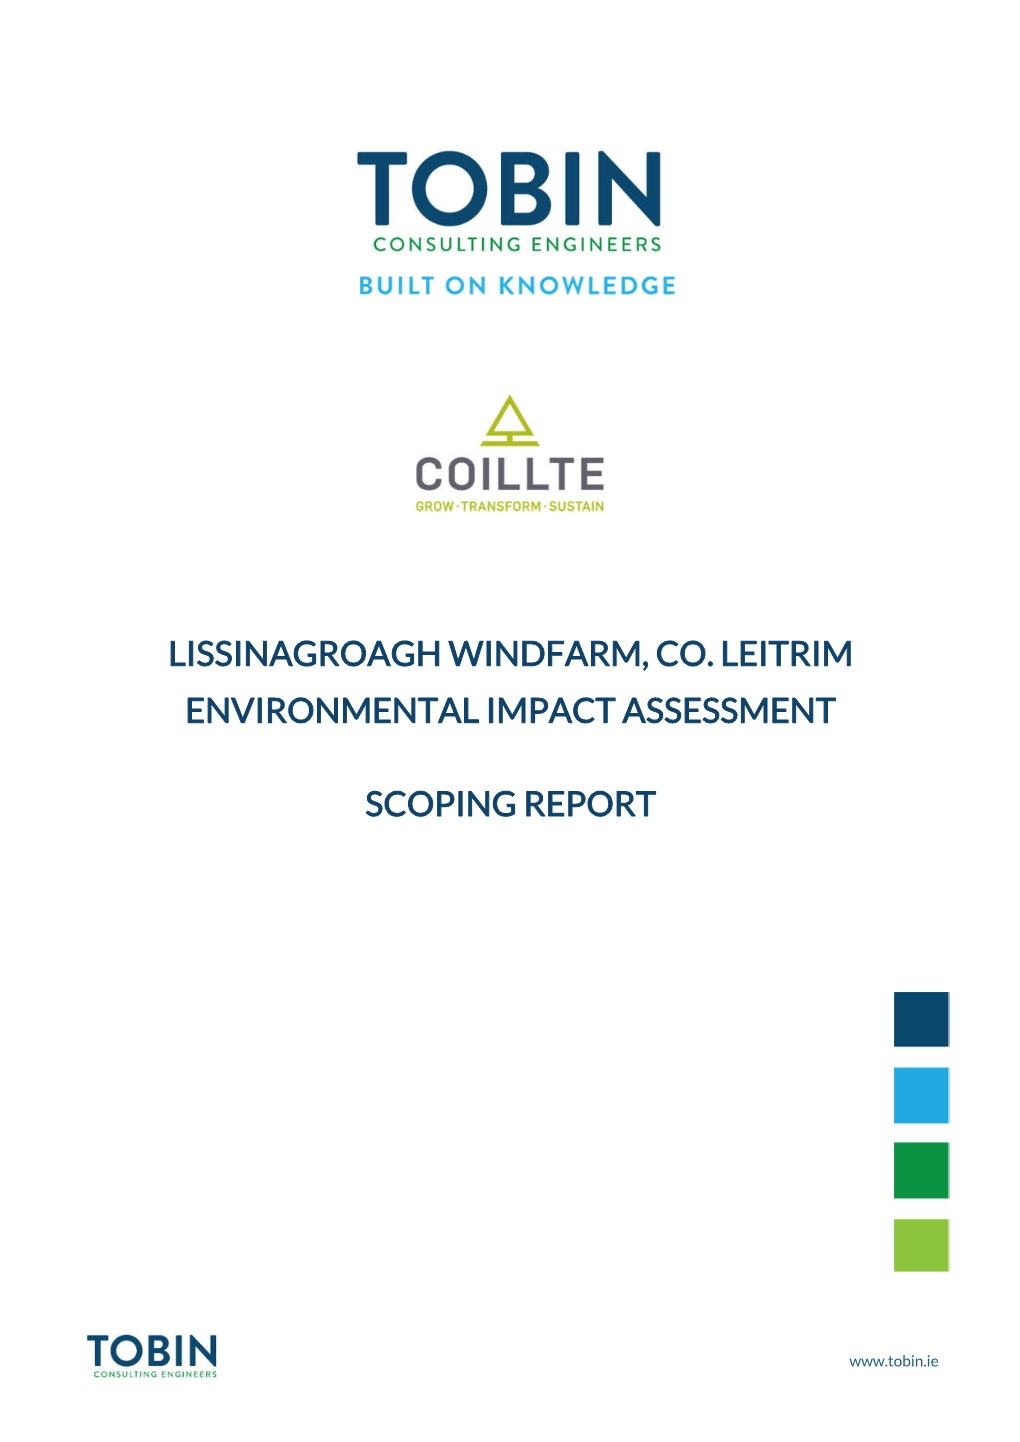 Lissinagroagh Windfarm, Co. Leitrim Environmental Impact Assessment Scoping Report